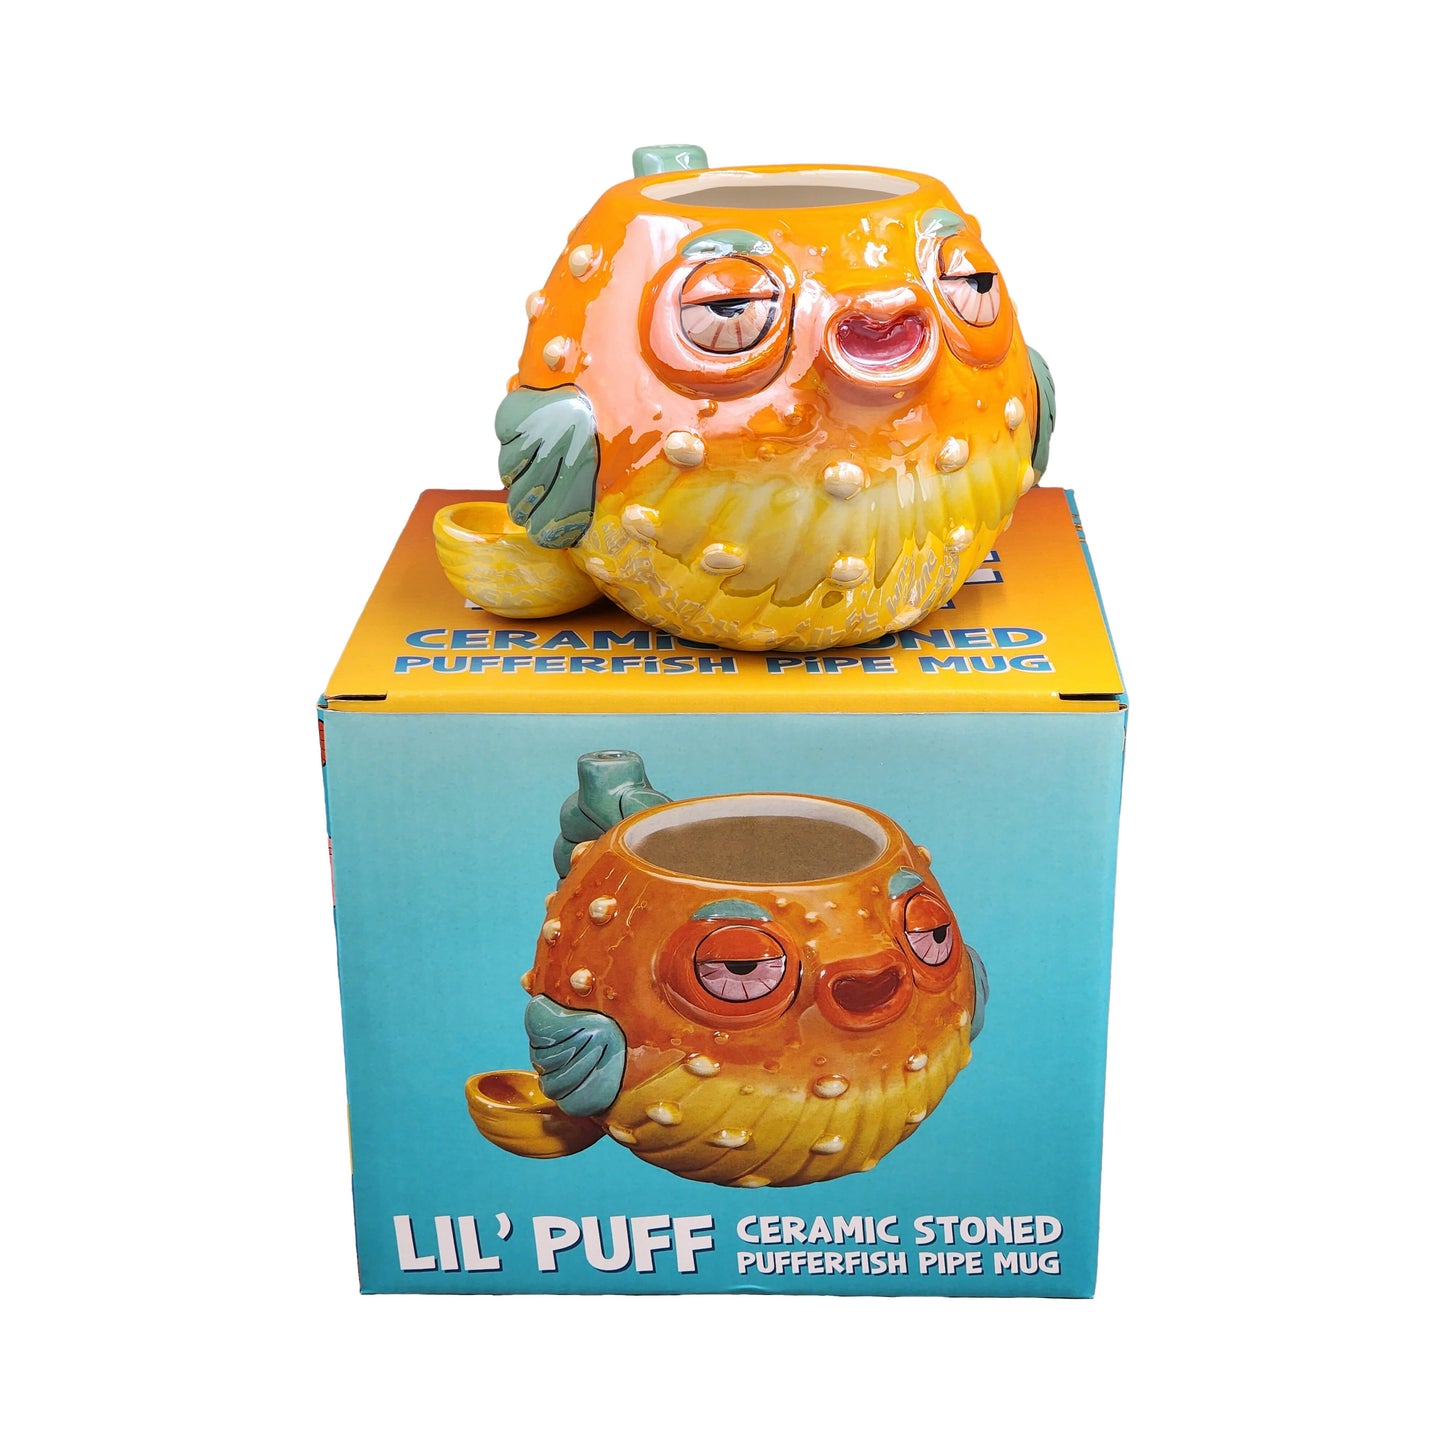 Stoned pufferfish mug pipe_5